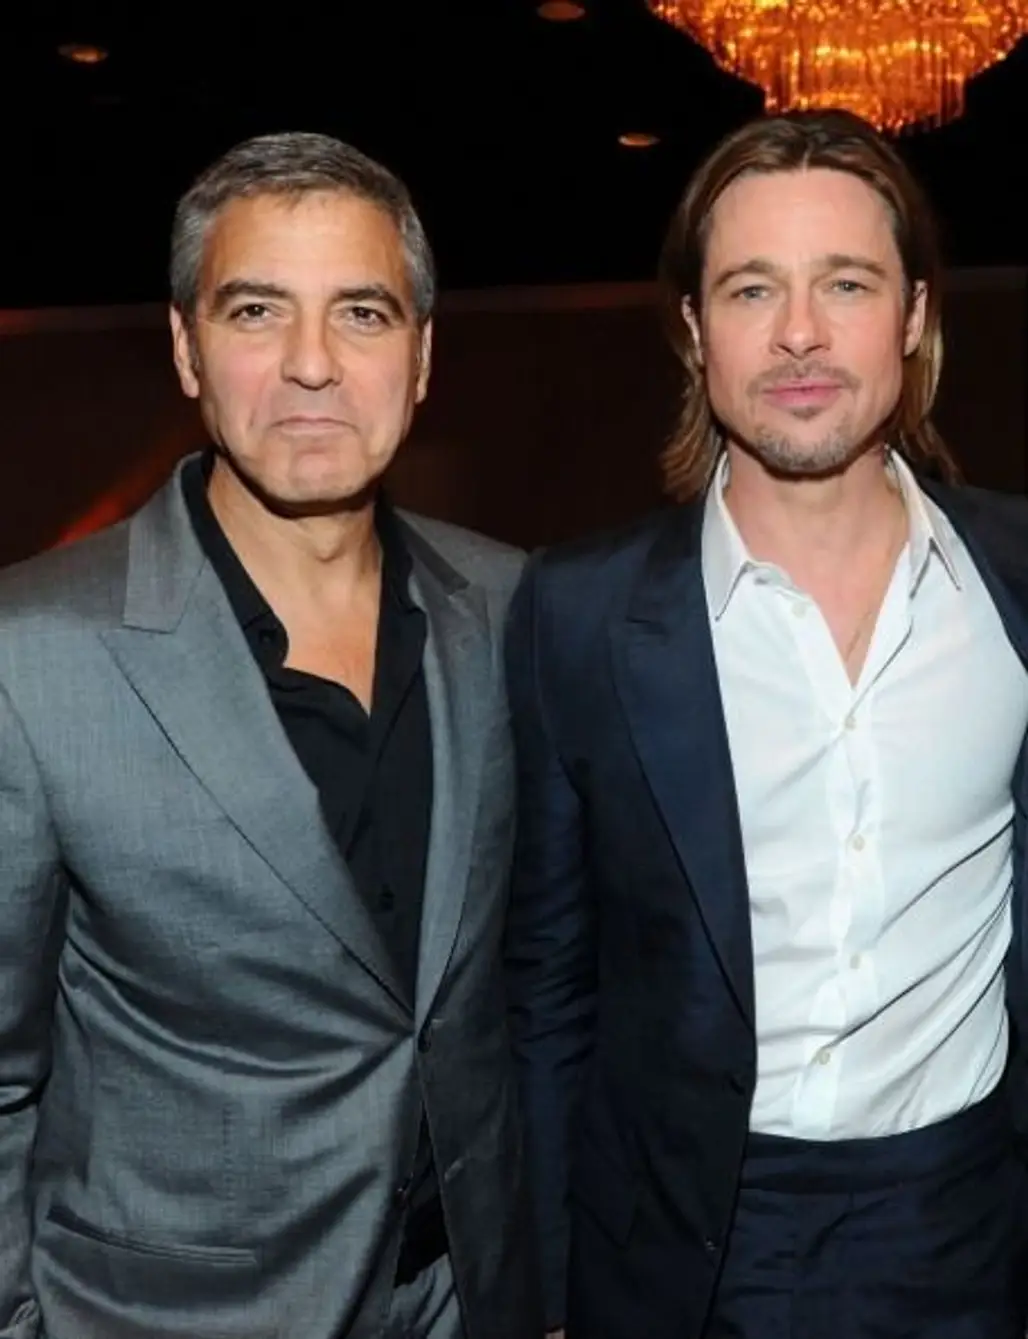 George Clooney & Brad Pitt